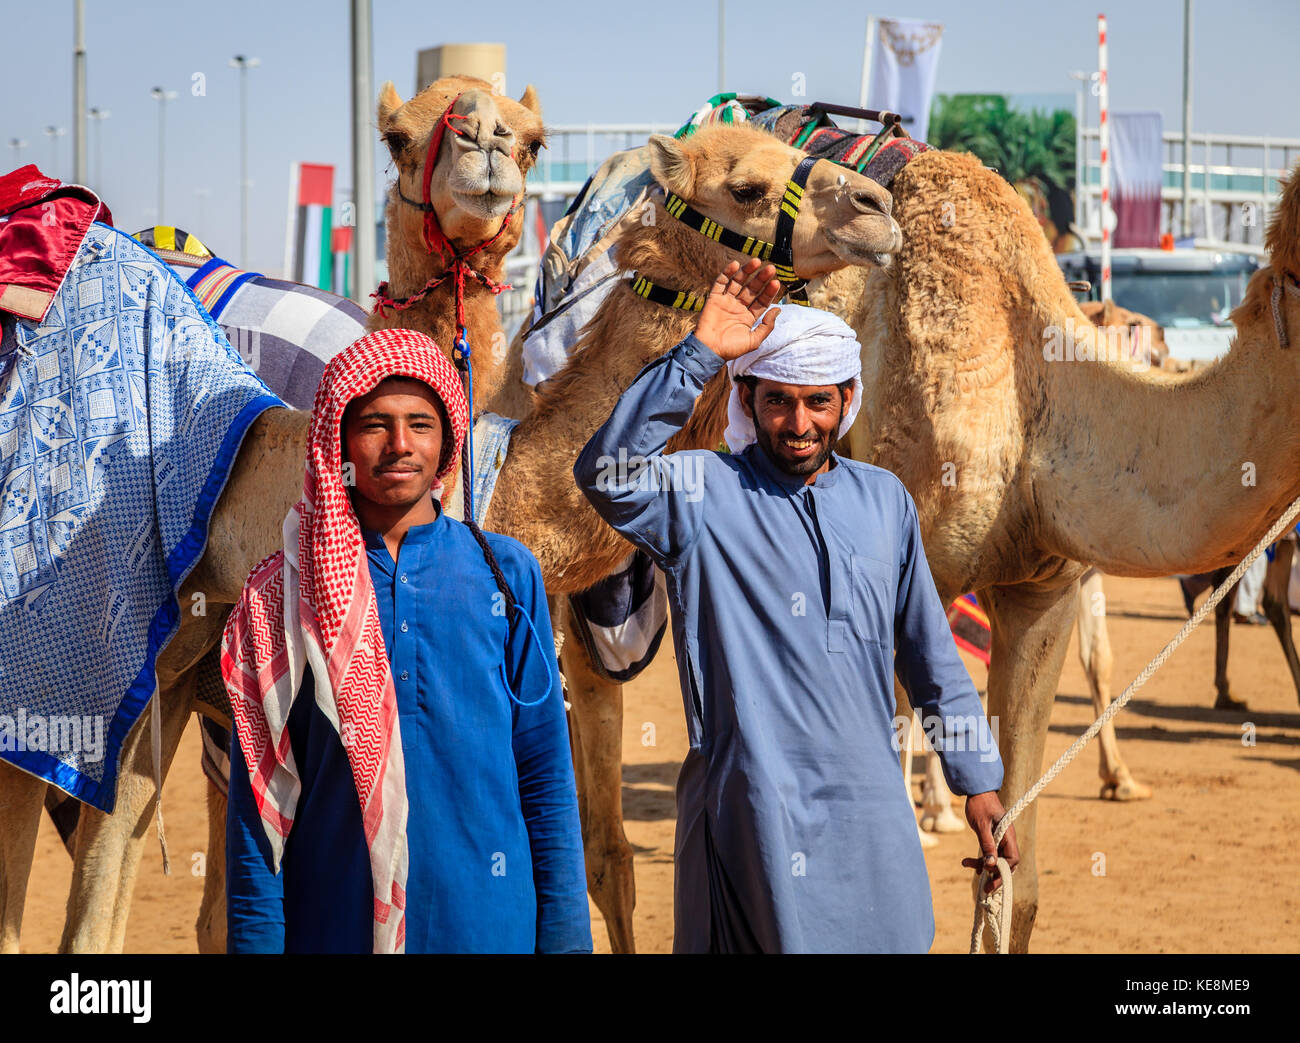 Dubai, United Arab Emirates - March 25, 2016: Camel handlers with their animals at Dubai Camel Racing Club Stock Photo